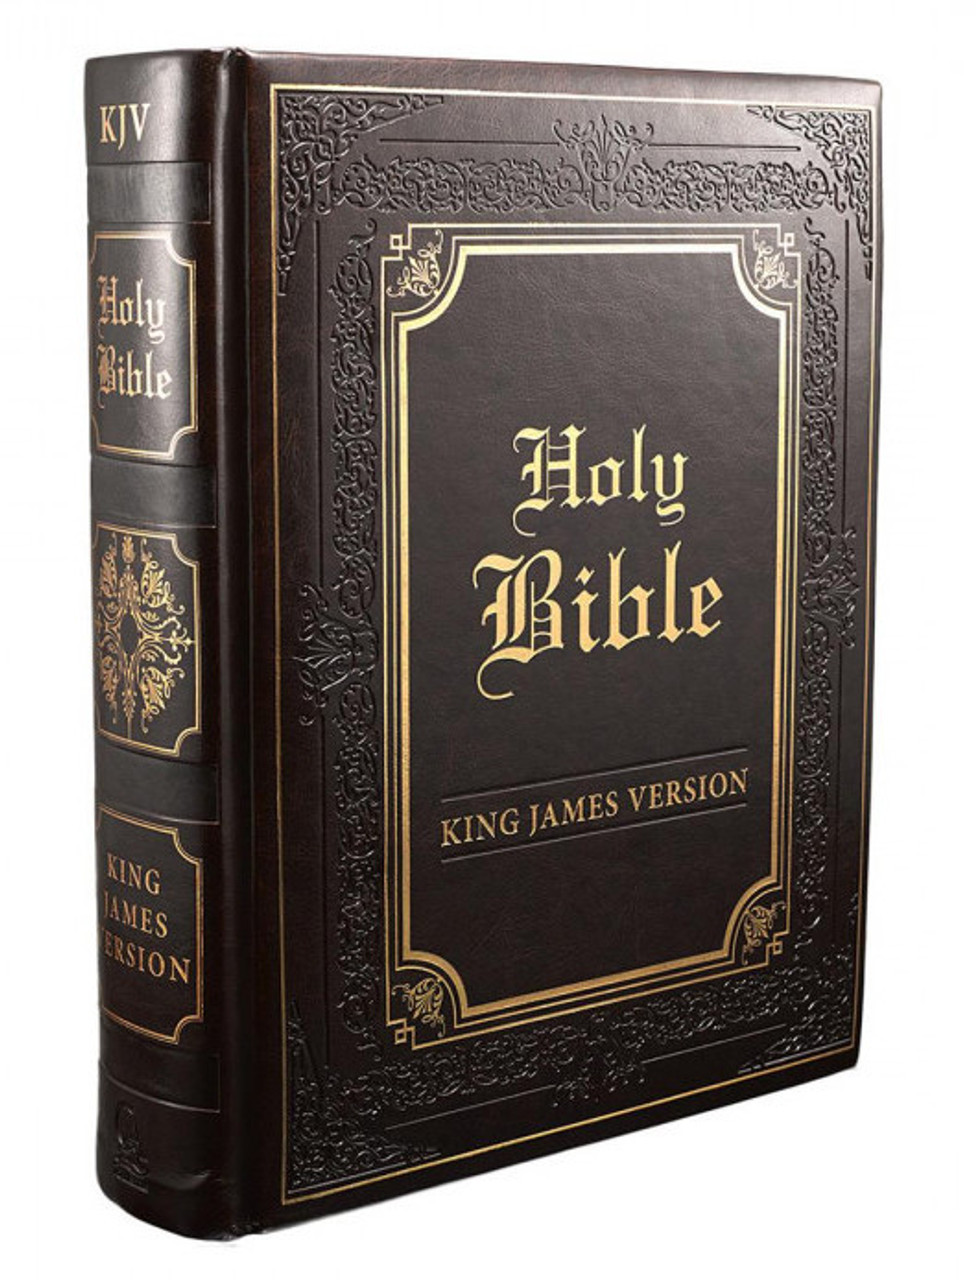 King James Bible, Version & History - Video & Lesson Transcript